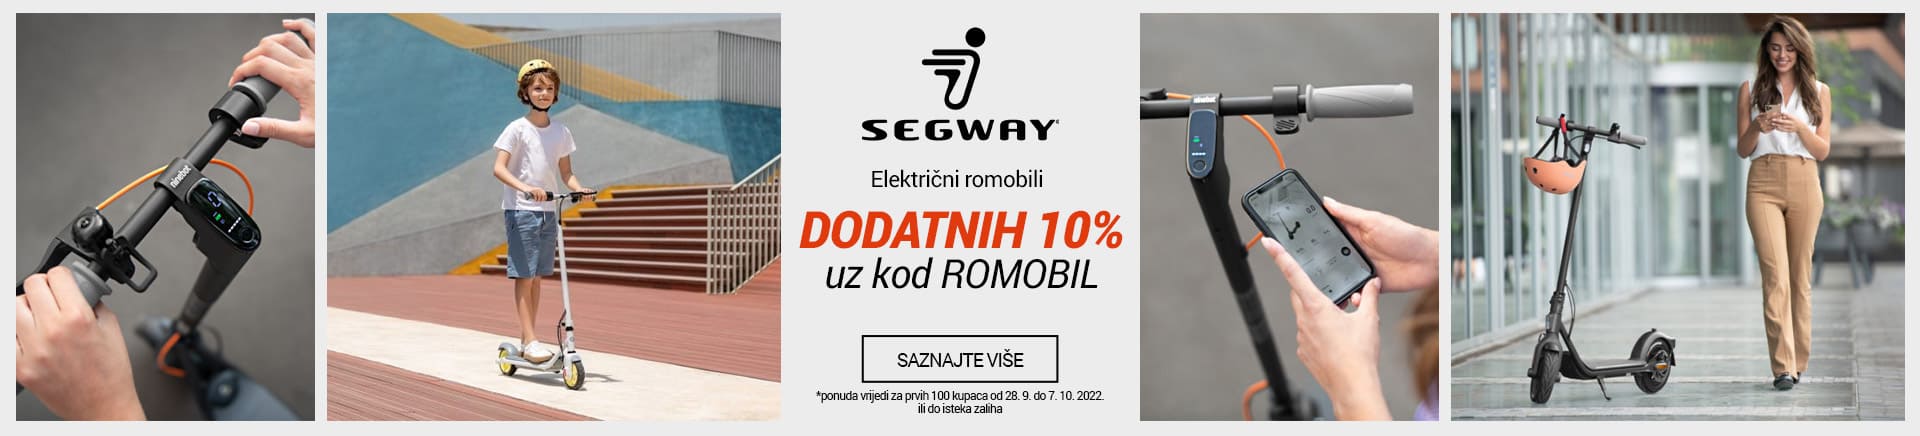 Segway električni romobili dodatnih 10% uz kod ROMOBIL